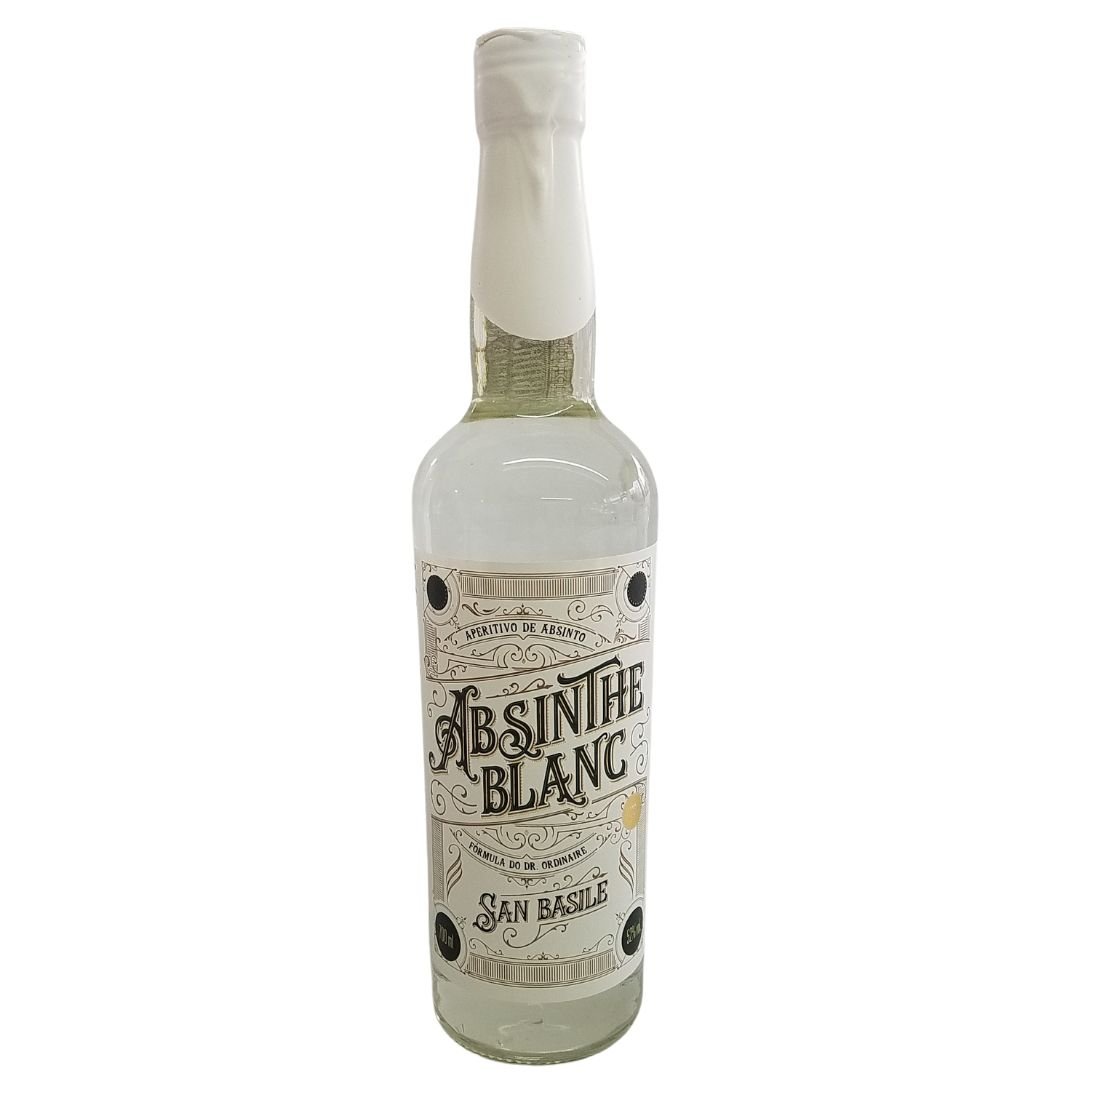 san-basile-absinthe-blanc-700ml